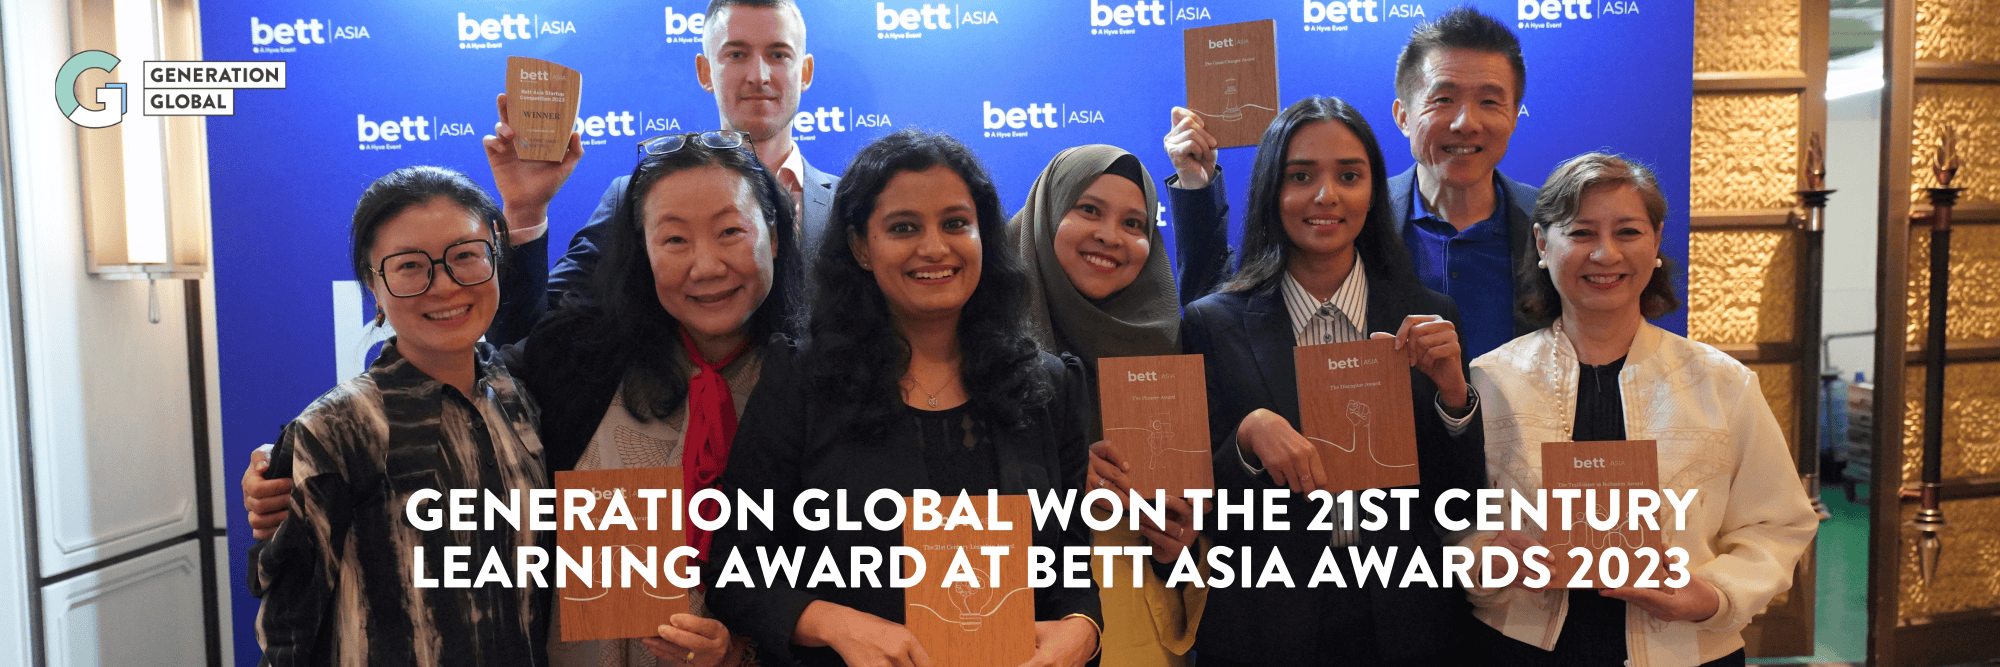 Generation Global Wins 21st Century Learning Award at Bett Asia 2023!